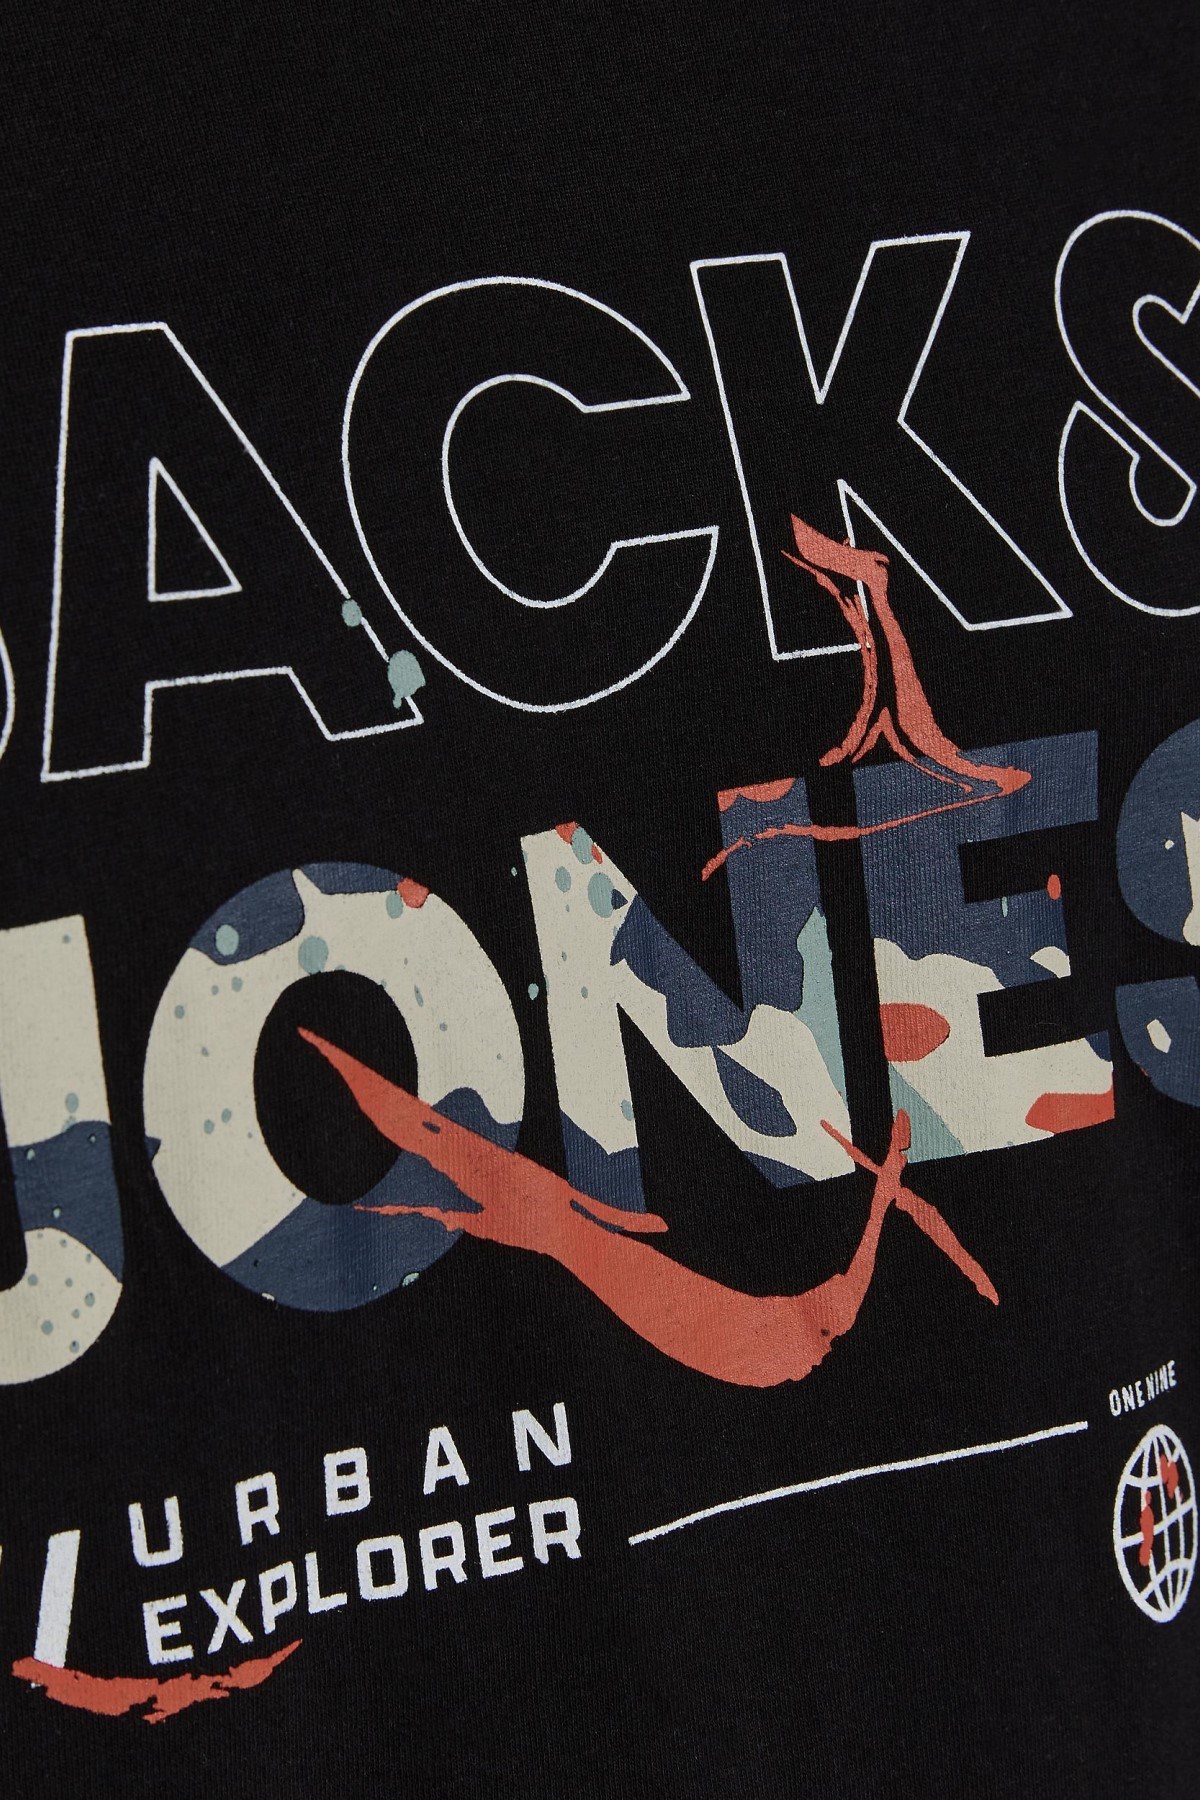 Jack Jones Erkek T-Shirt 12205244 Black